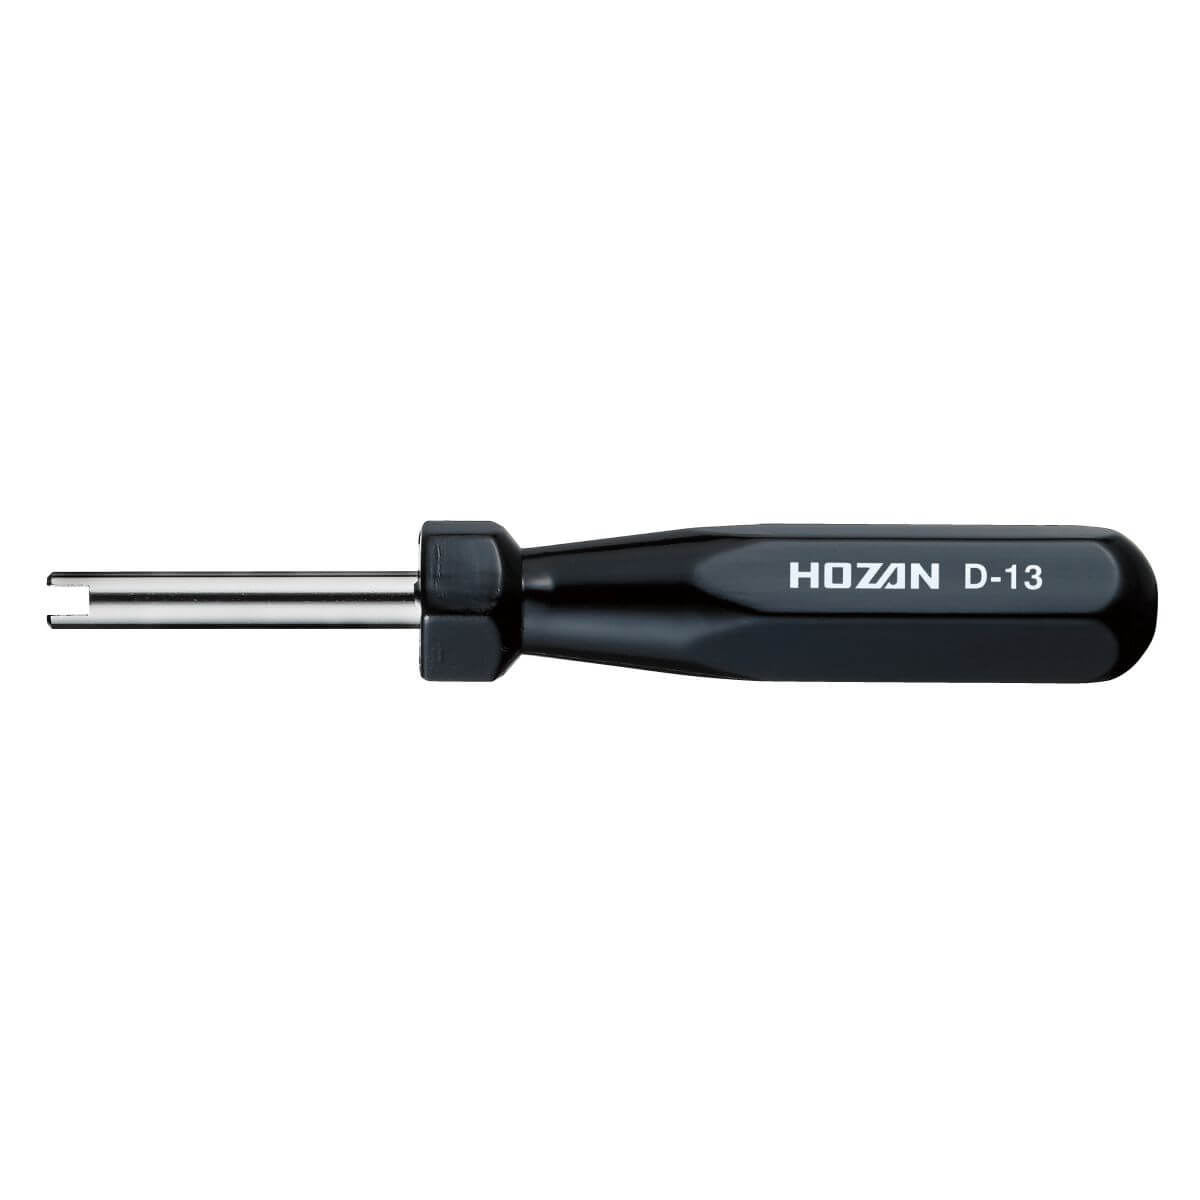 Hozan D-13 Valve Core Screwdriver